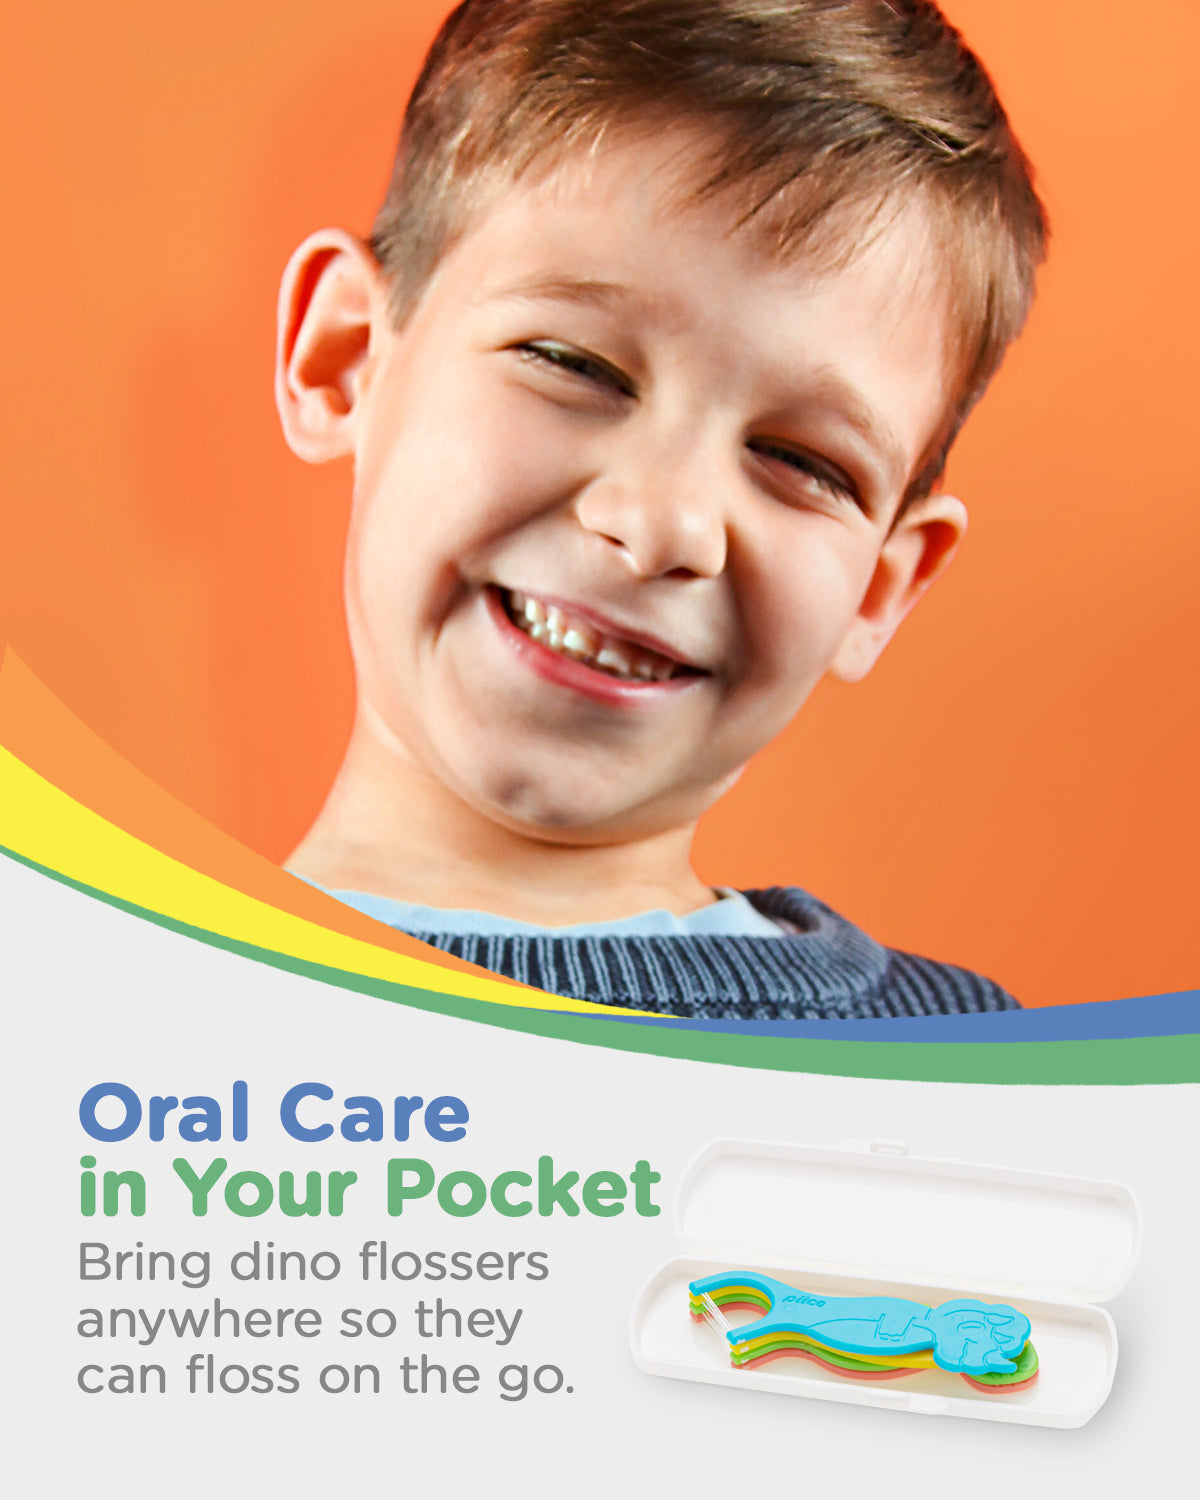 Piico Dental Floss Picks for Kids - (300 Count Playground Dino + Freebies)